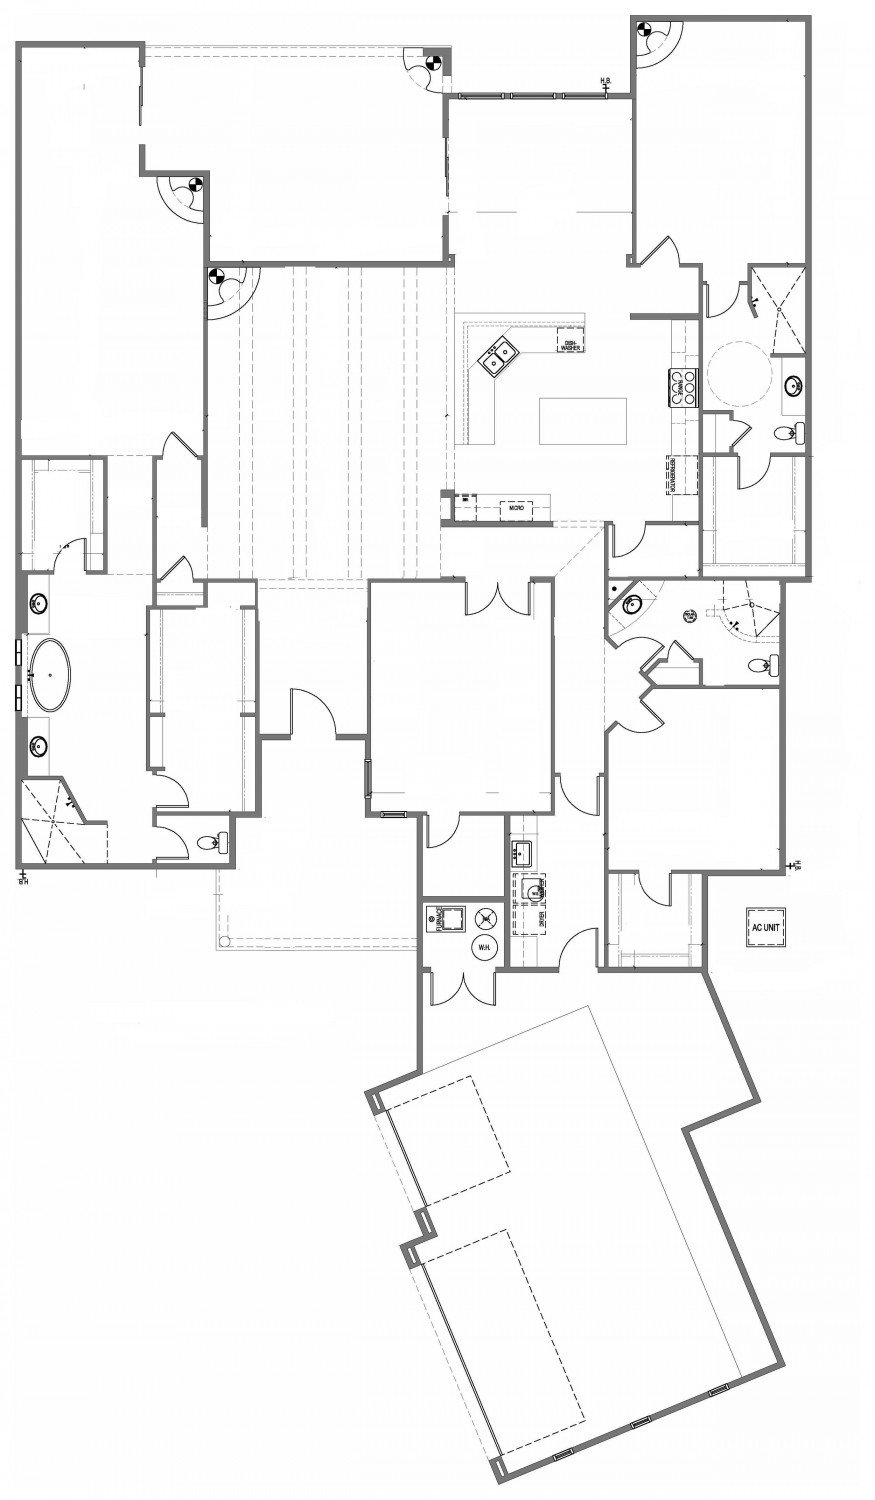 Calico Rose Floorplan - 3,548 sq ft